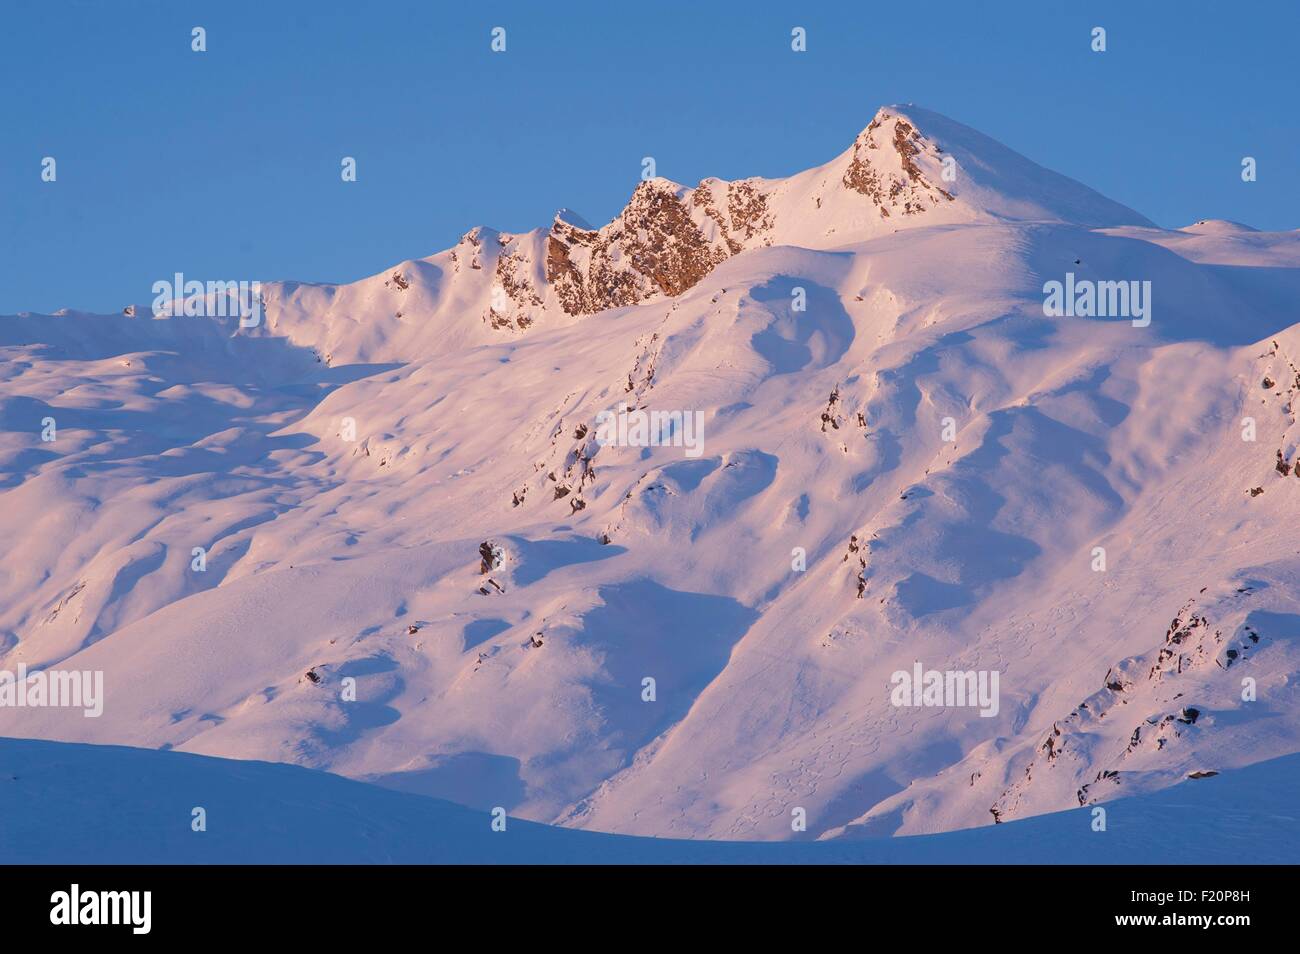 Switzerland, Ticino, ski mountaineering on Pizzo dell'Uomo above Passo Lucomagno Stock Photo